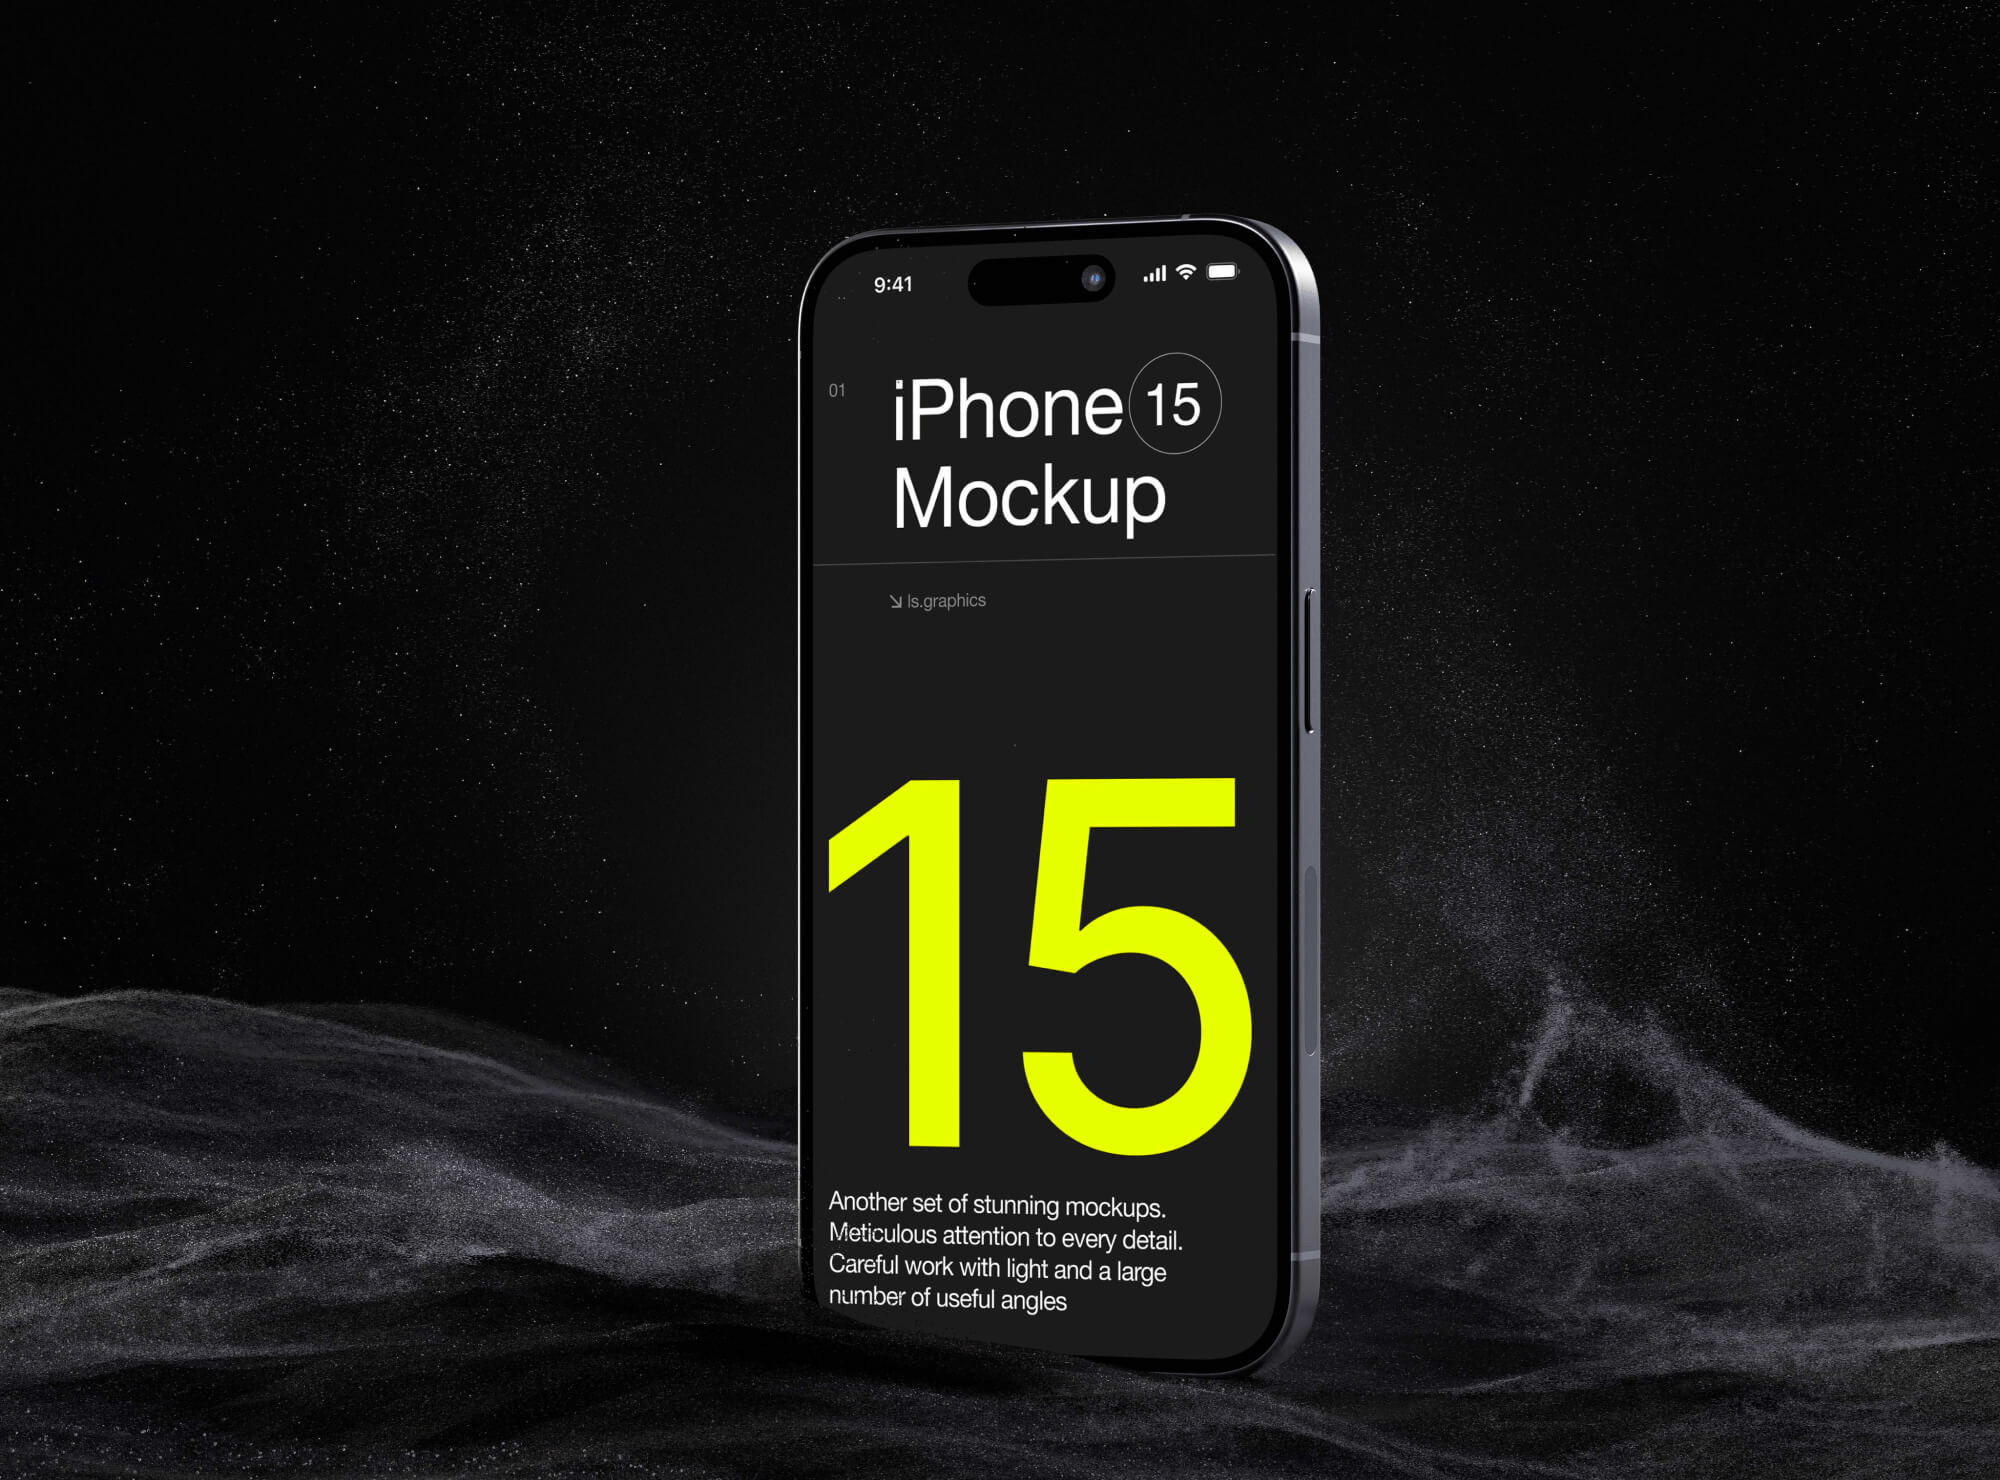 High-resolution iPhone 15 Pro mockup in a dark, elegant setting, ideal for showcasing app designs.